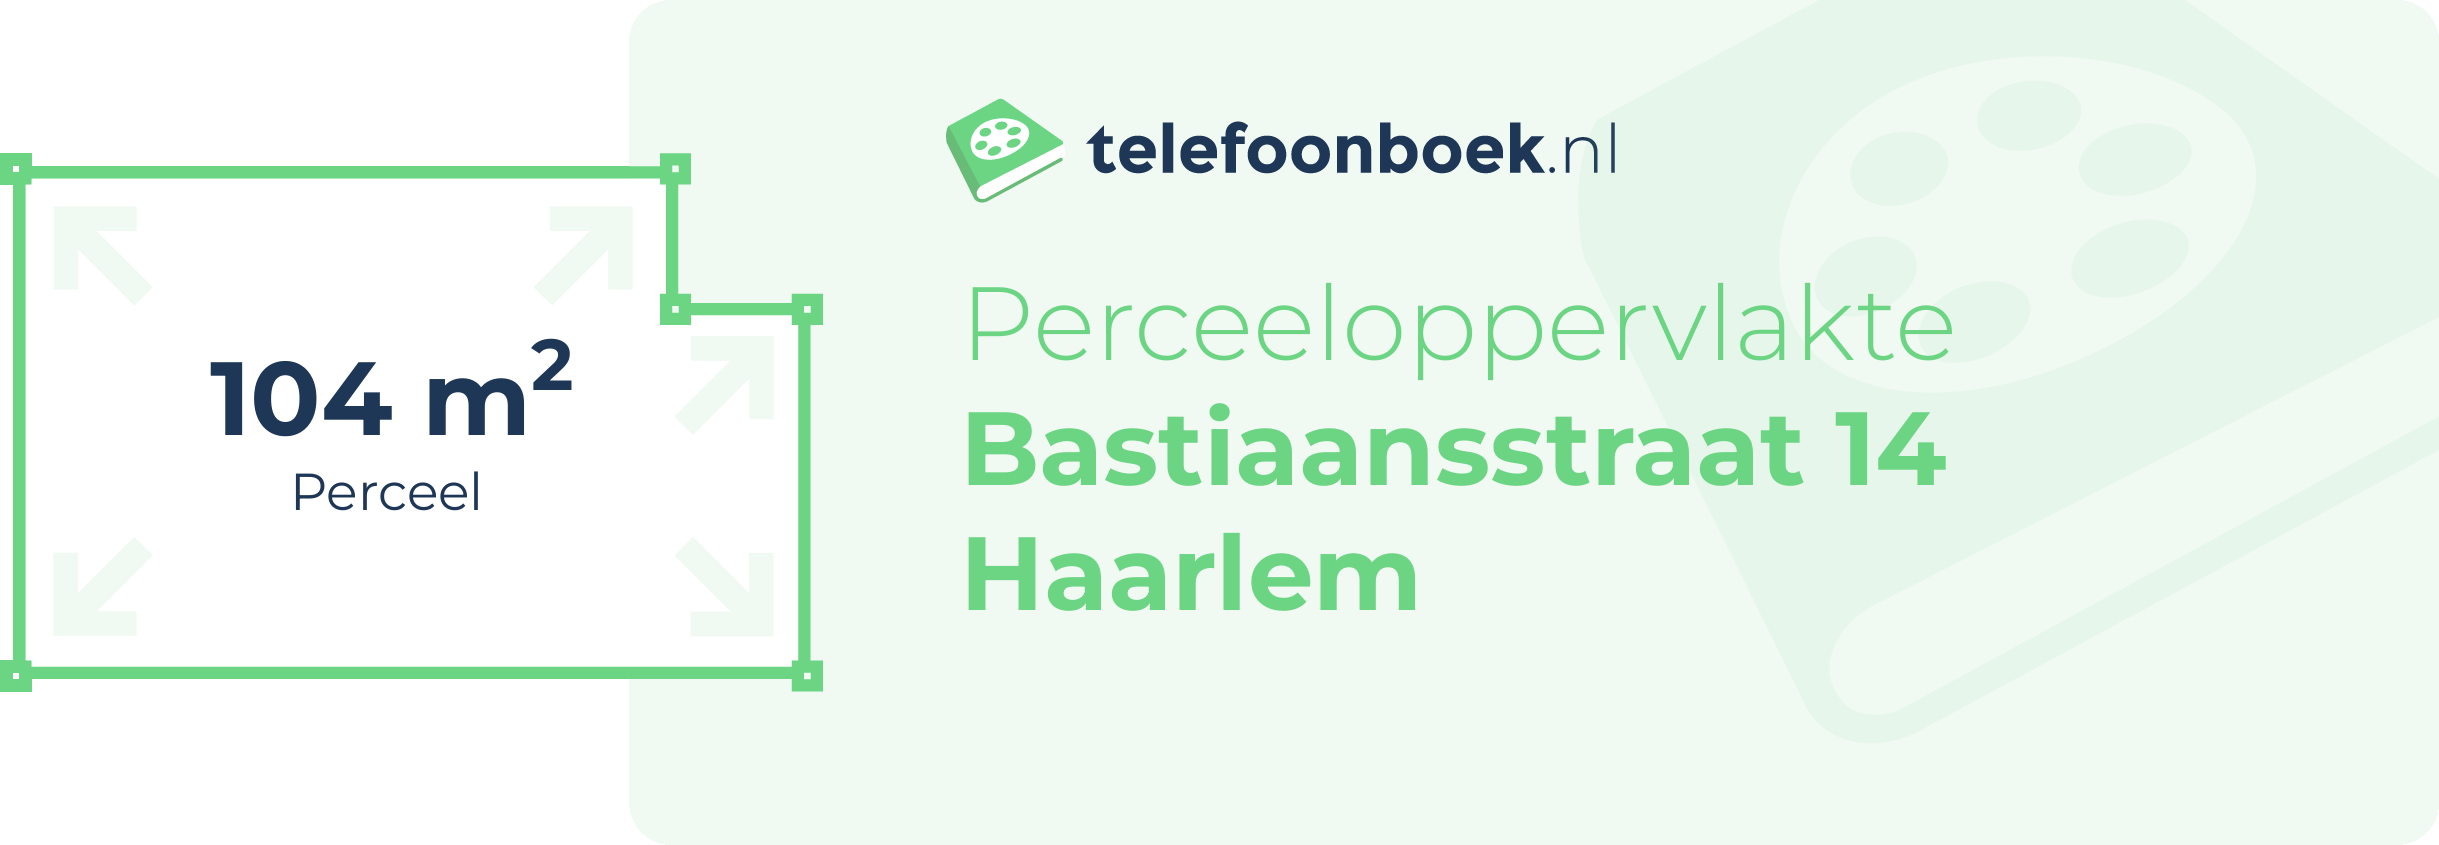 Perceeloppervlakte Bastiaansstraat 14 Haarlem